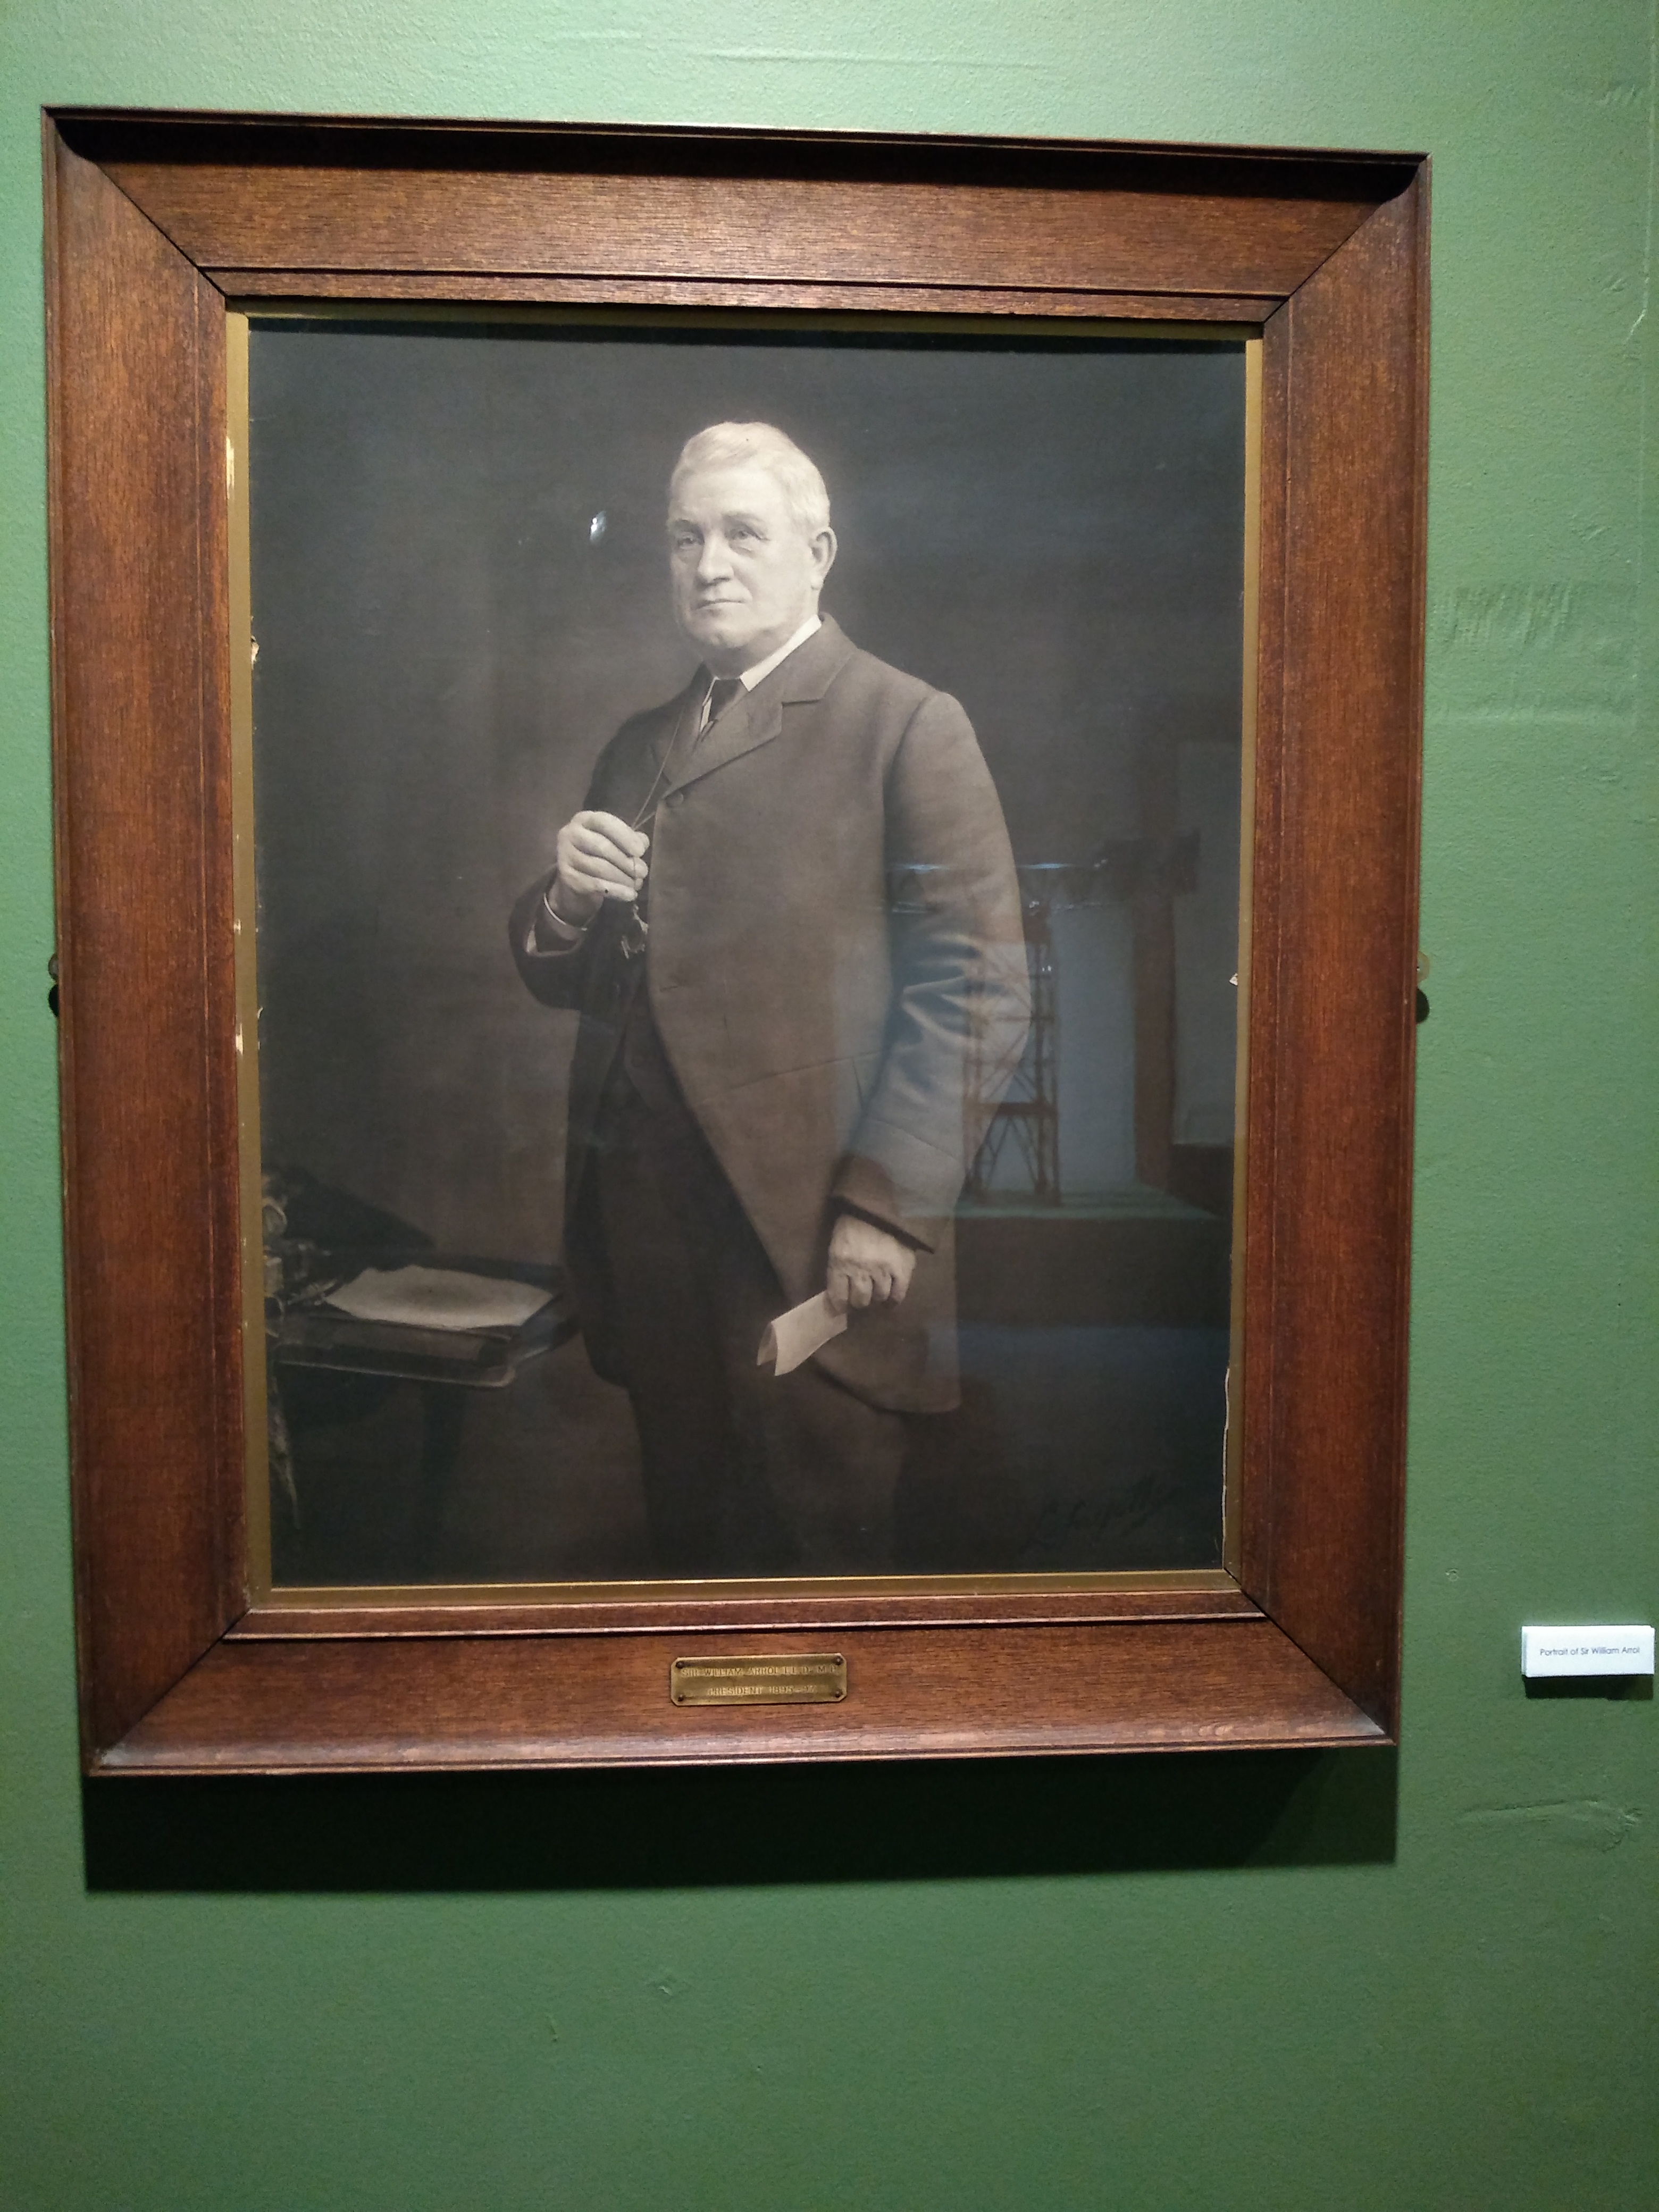 Framed photographic portrait of Sir William Arrol